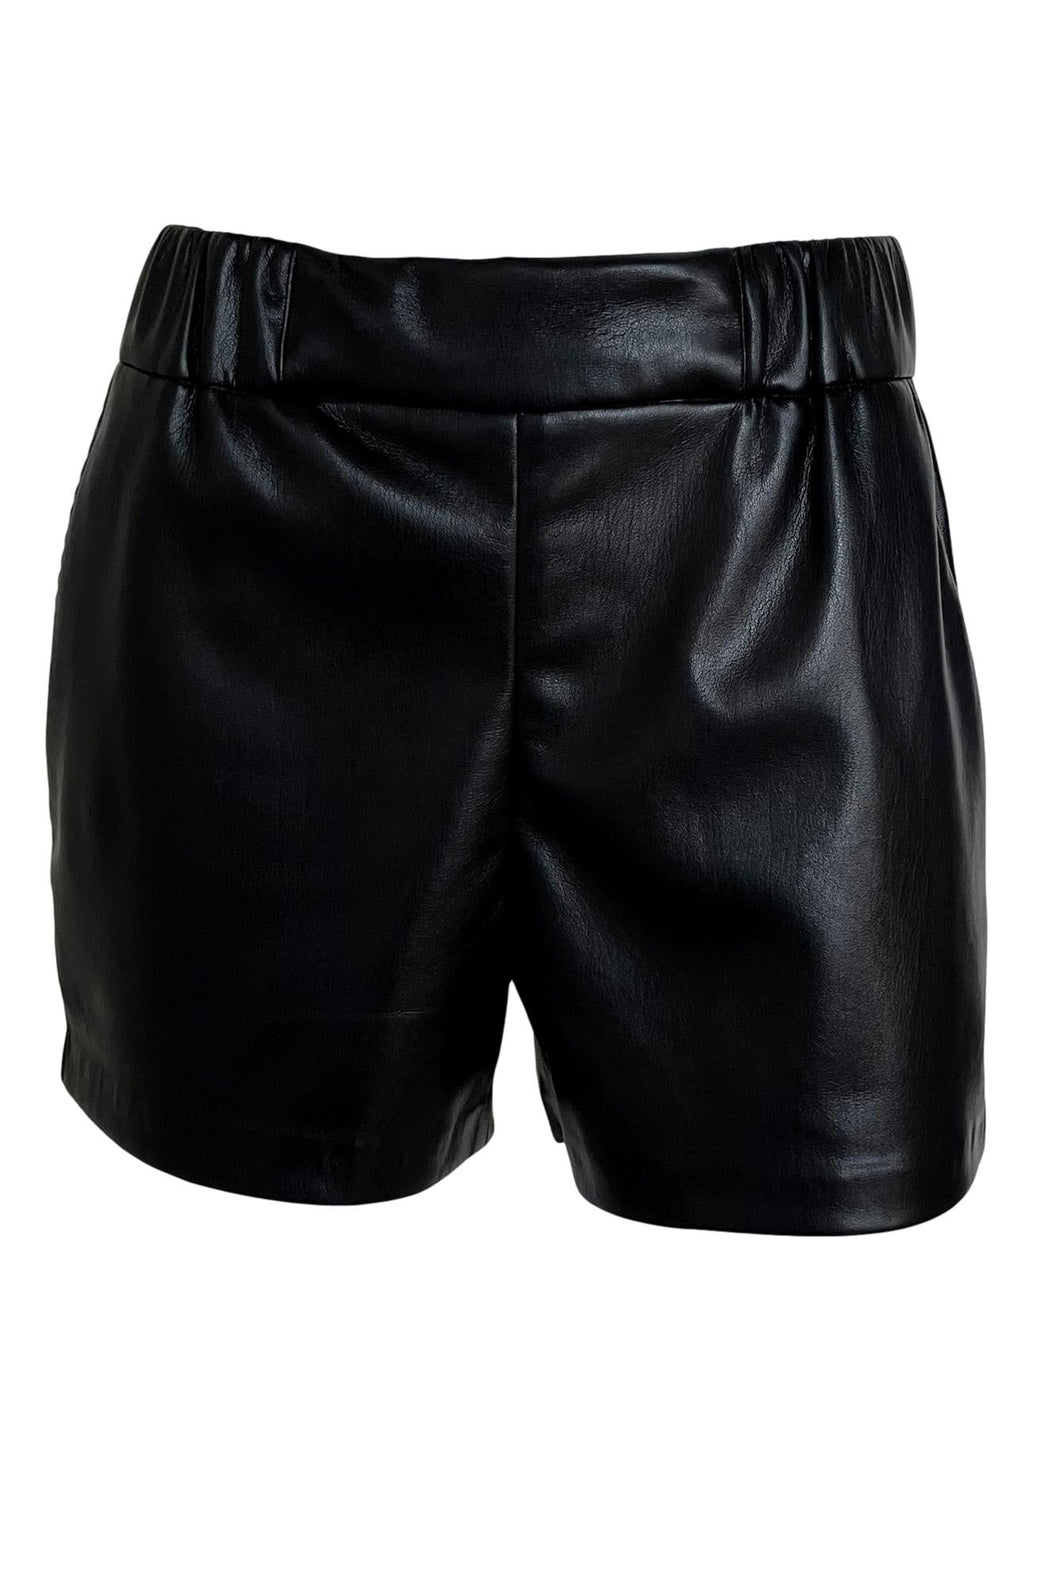 KOA Shorts- Black